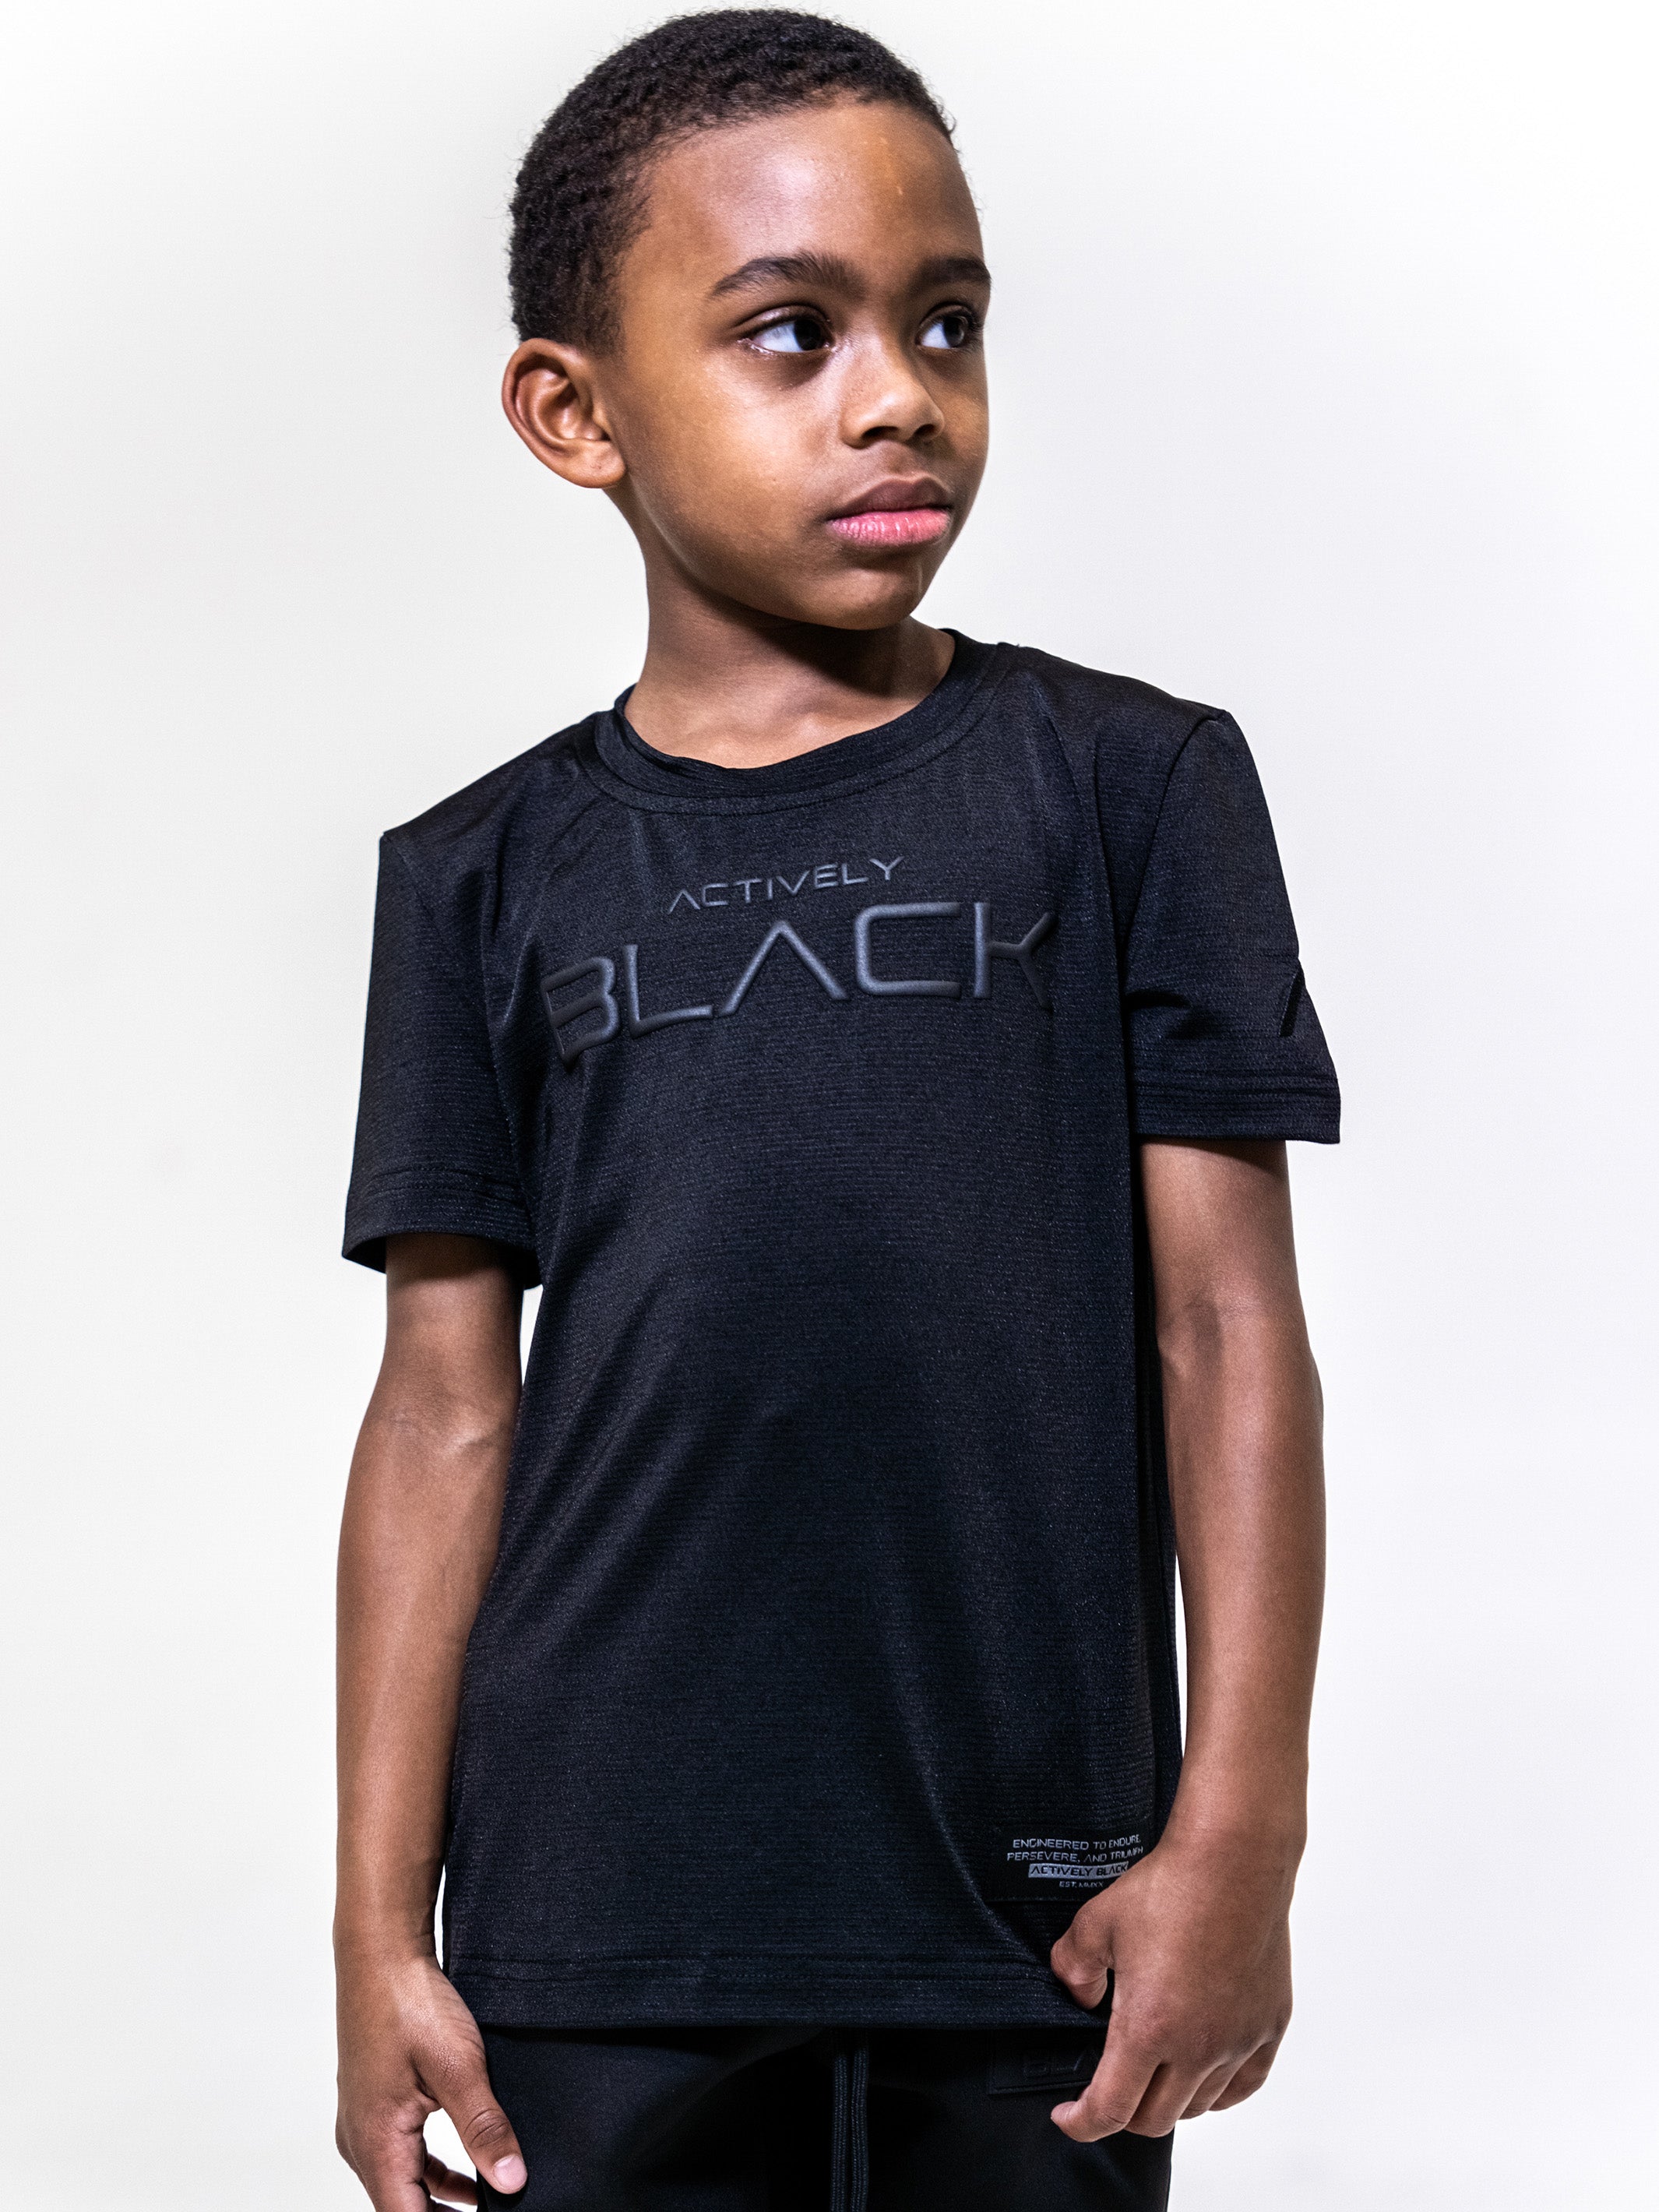 Kids Actively Black Performance Shirt